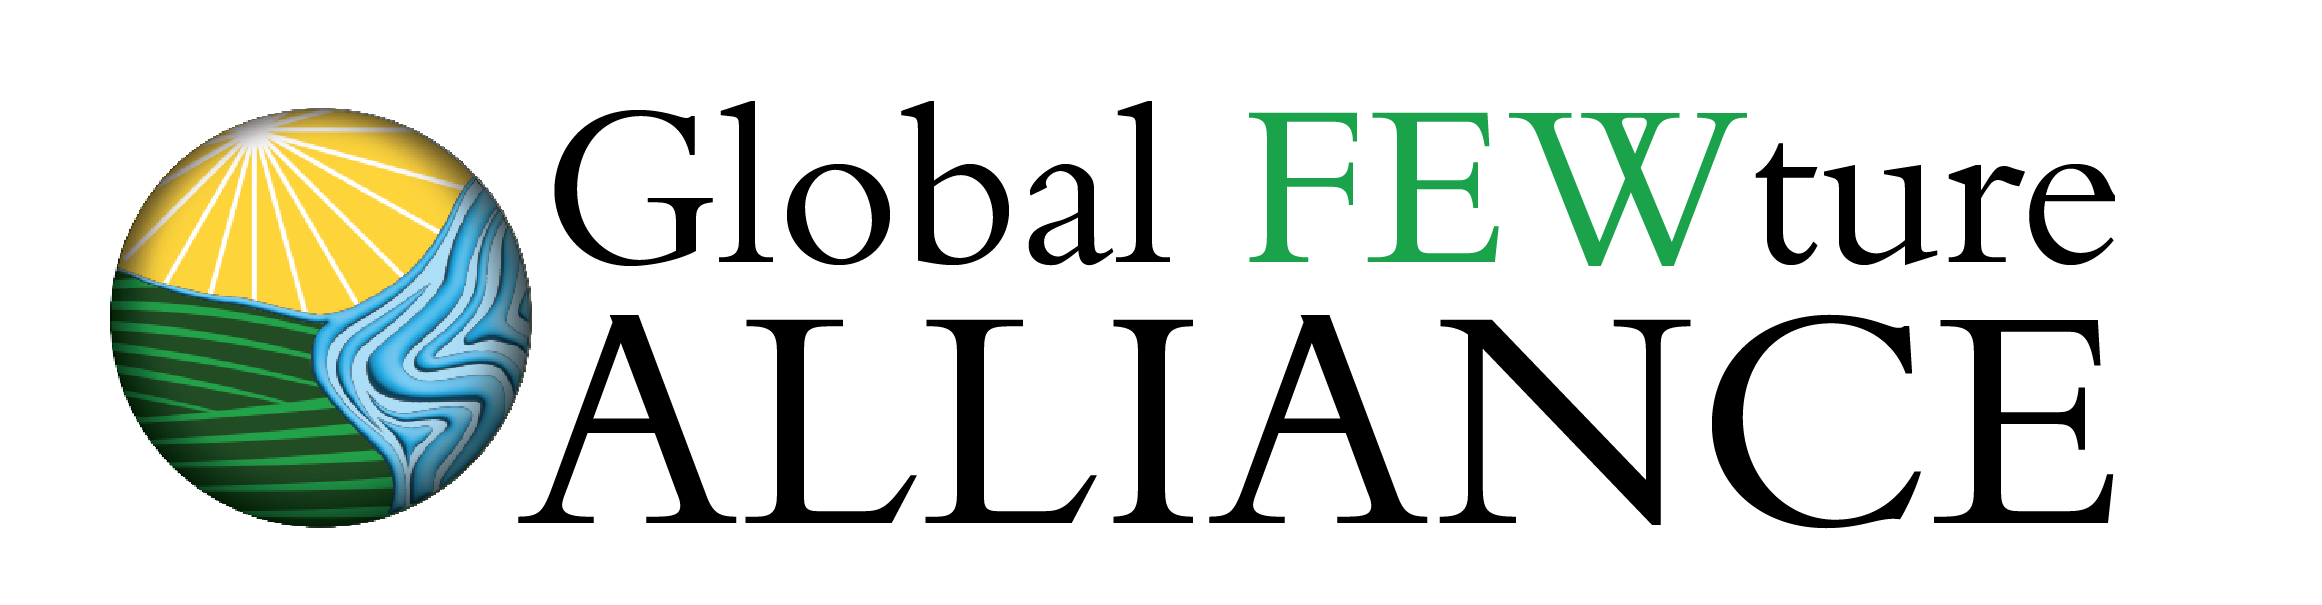 Global FEWture Alliance logo